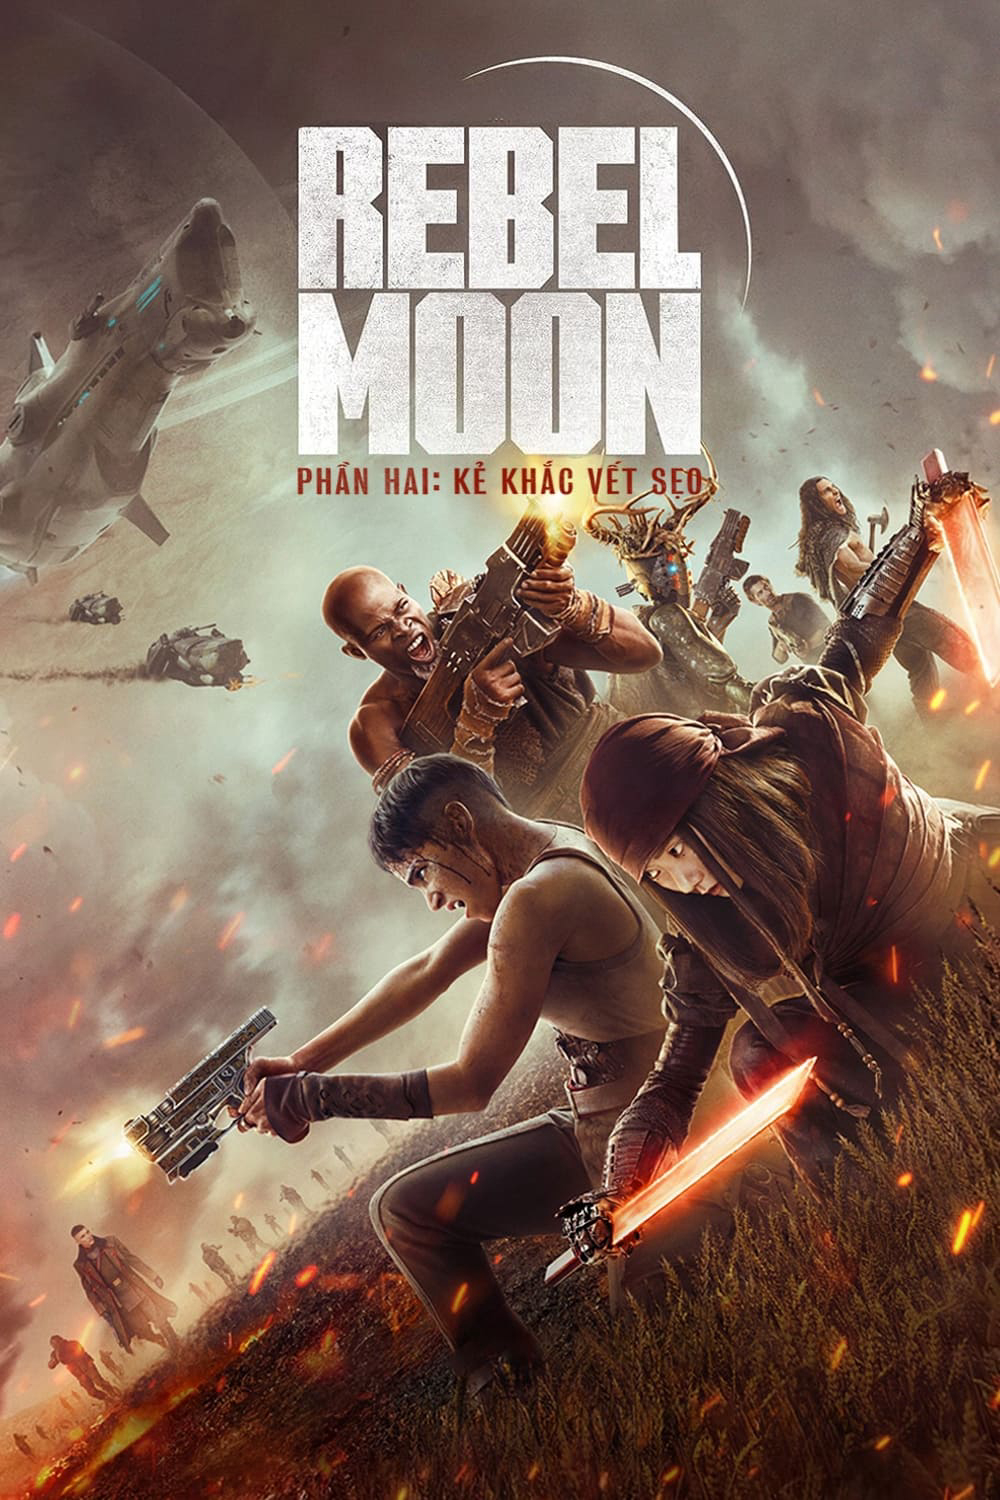 Poster Phim Rebel Moon – Phần hai: Kẻ khắc vết sẹo (Rebel Moon - Part Two: The Scargiver)